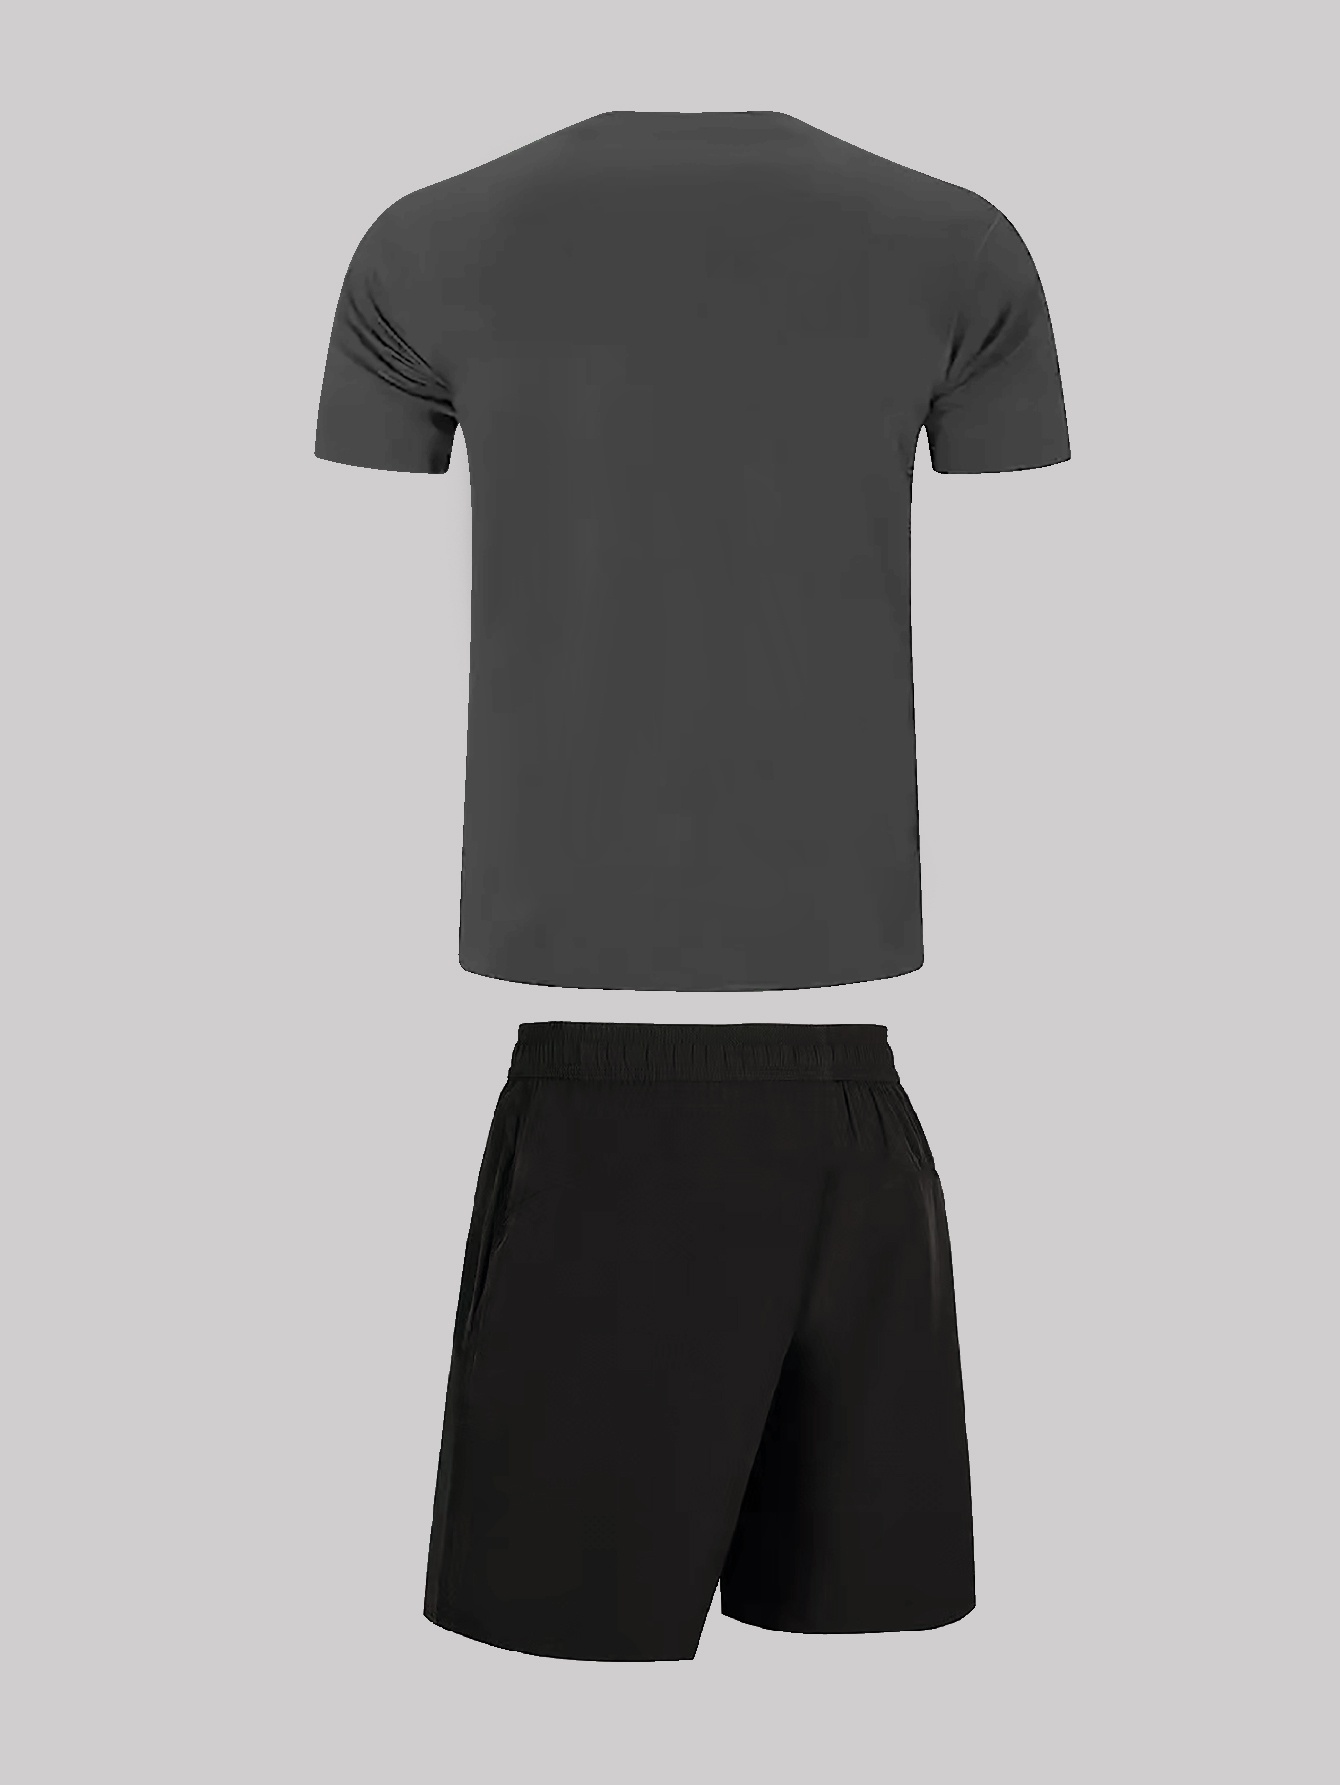 New Summer Basketball Clothes Soccer Tracksuit Men's T Shirt Set